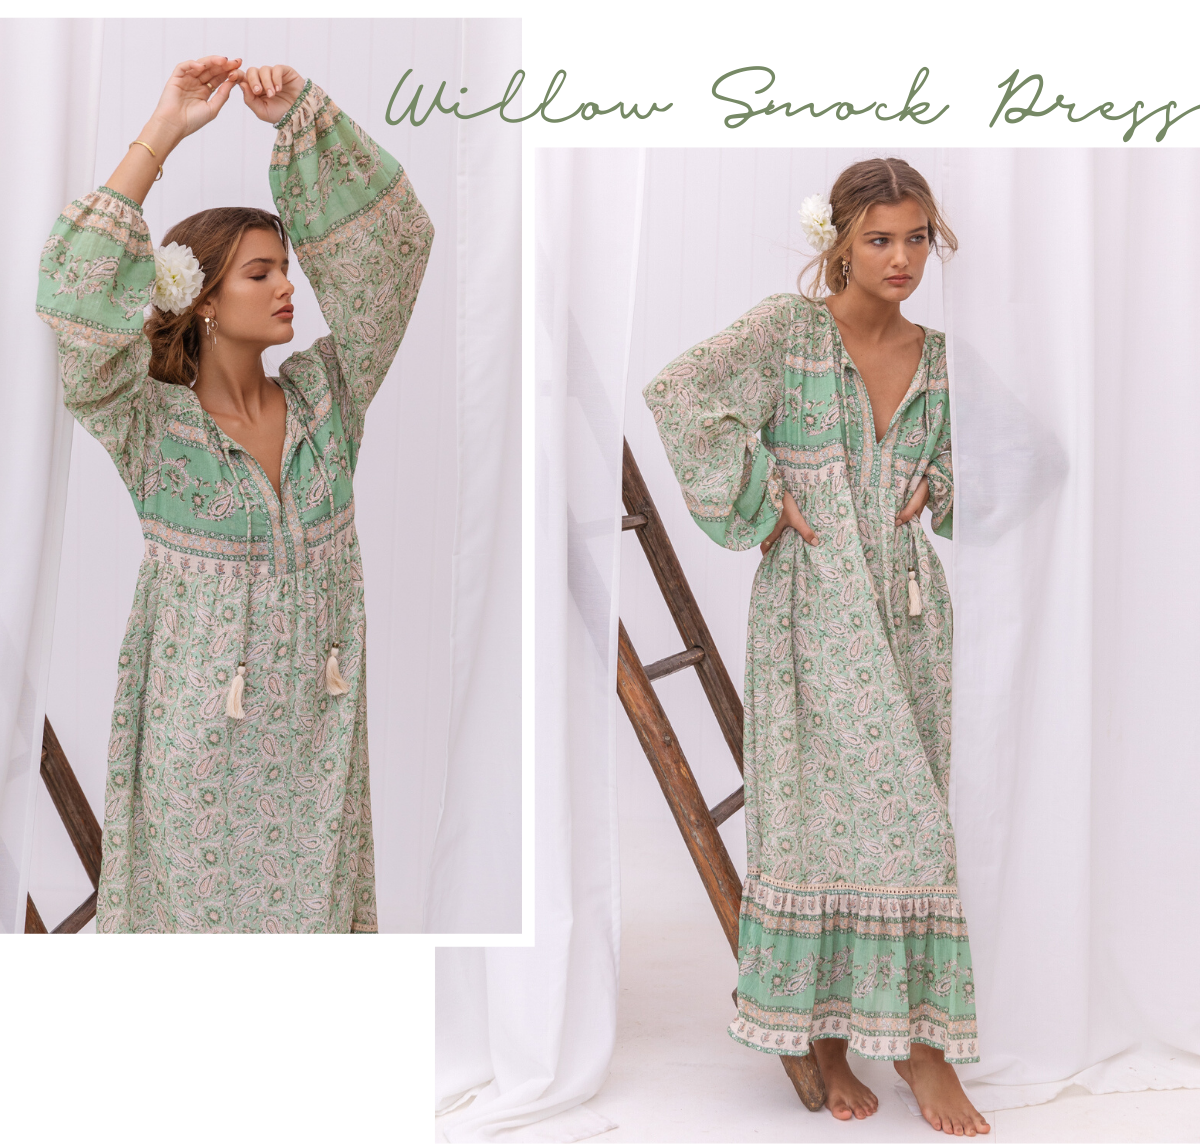 Willow Smock Dress - Evergreen